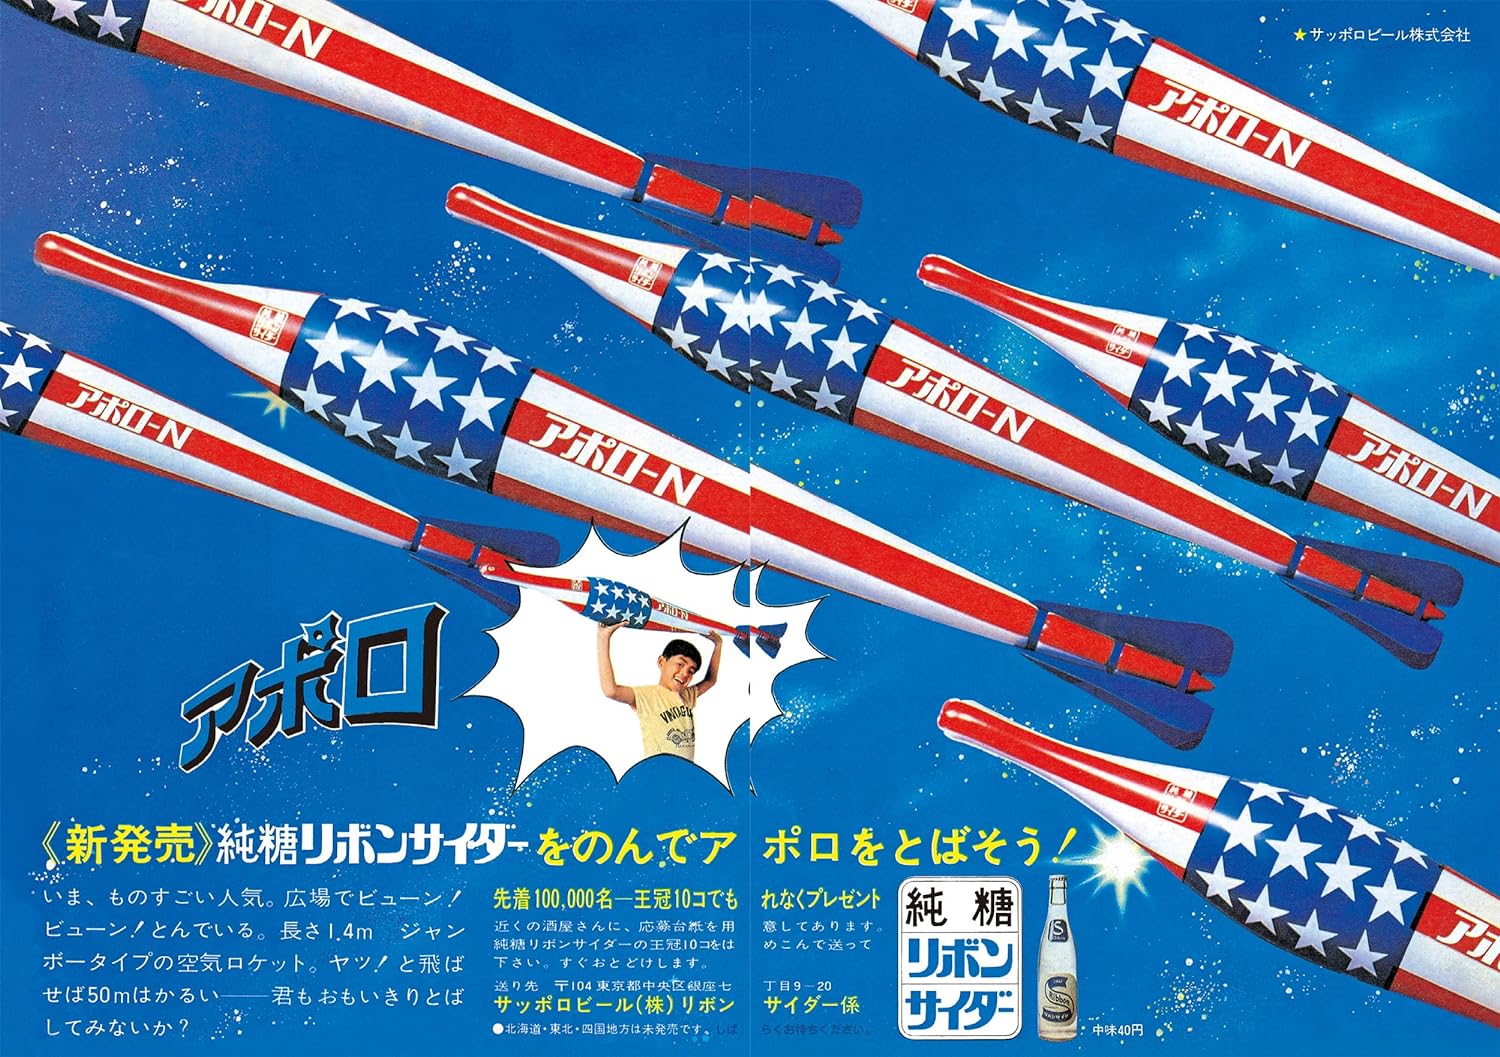 Children's advertisement in the Showa era